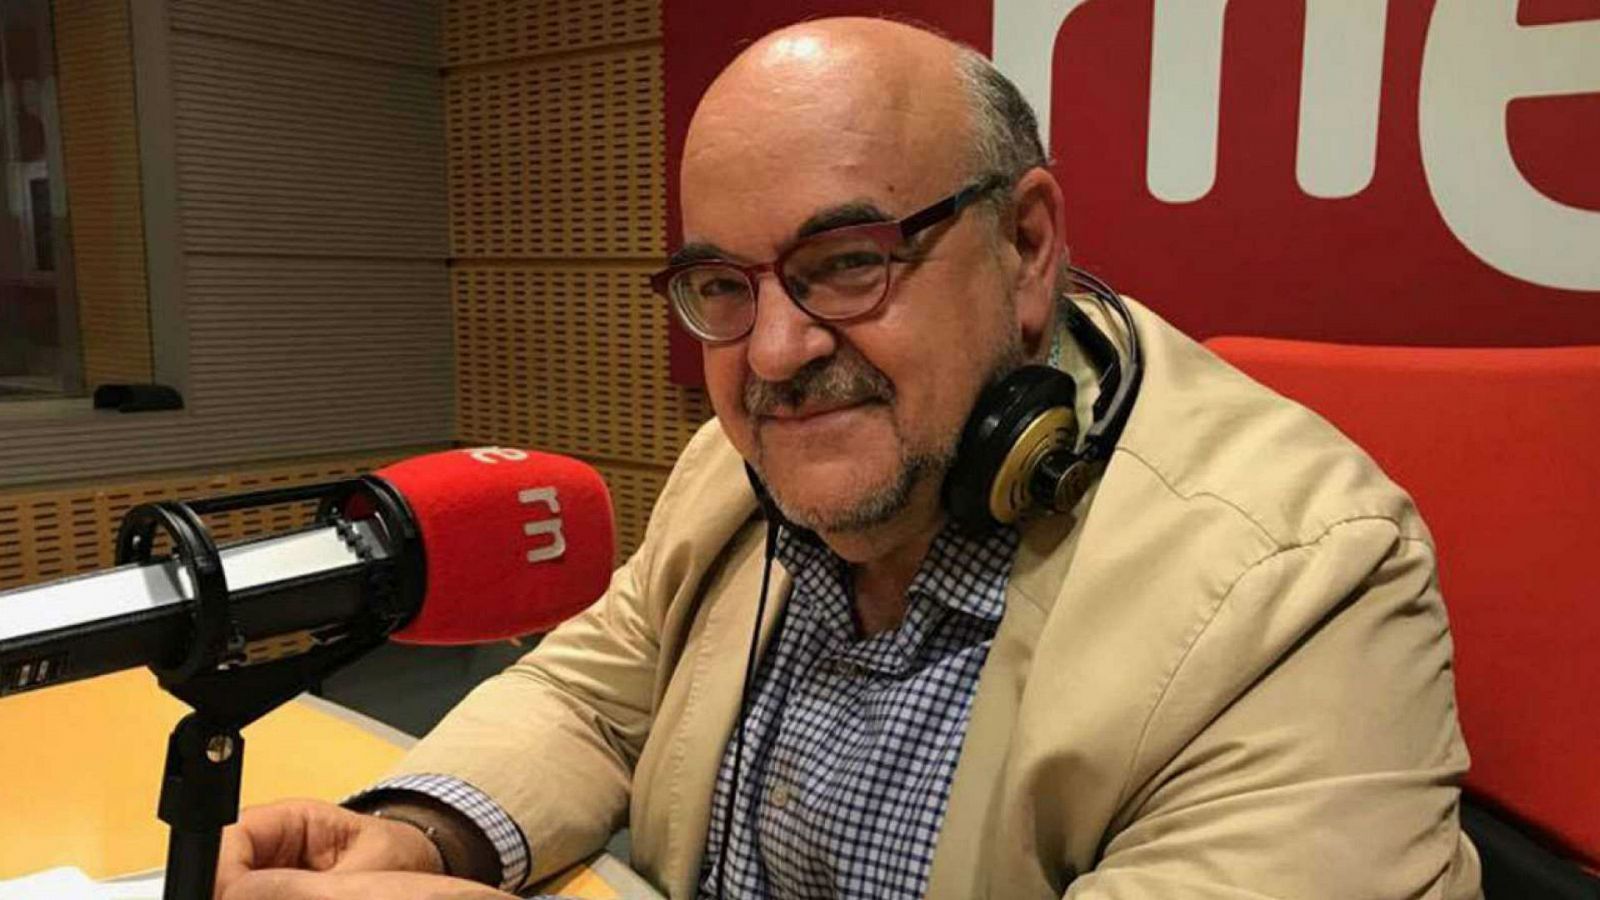 14 horas fin de semana - Esteban Beltrán: "Dan carta blanca para la represión al Ejército" - Escuchar ahora